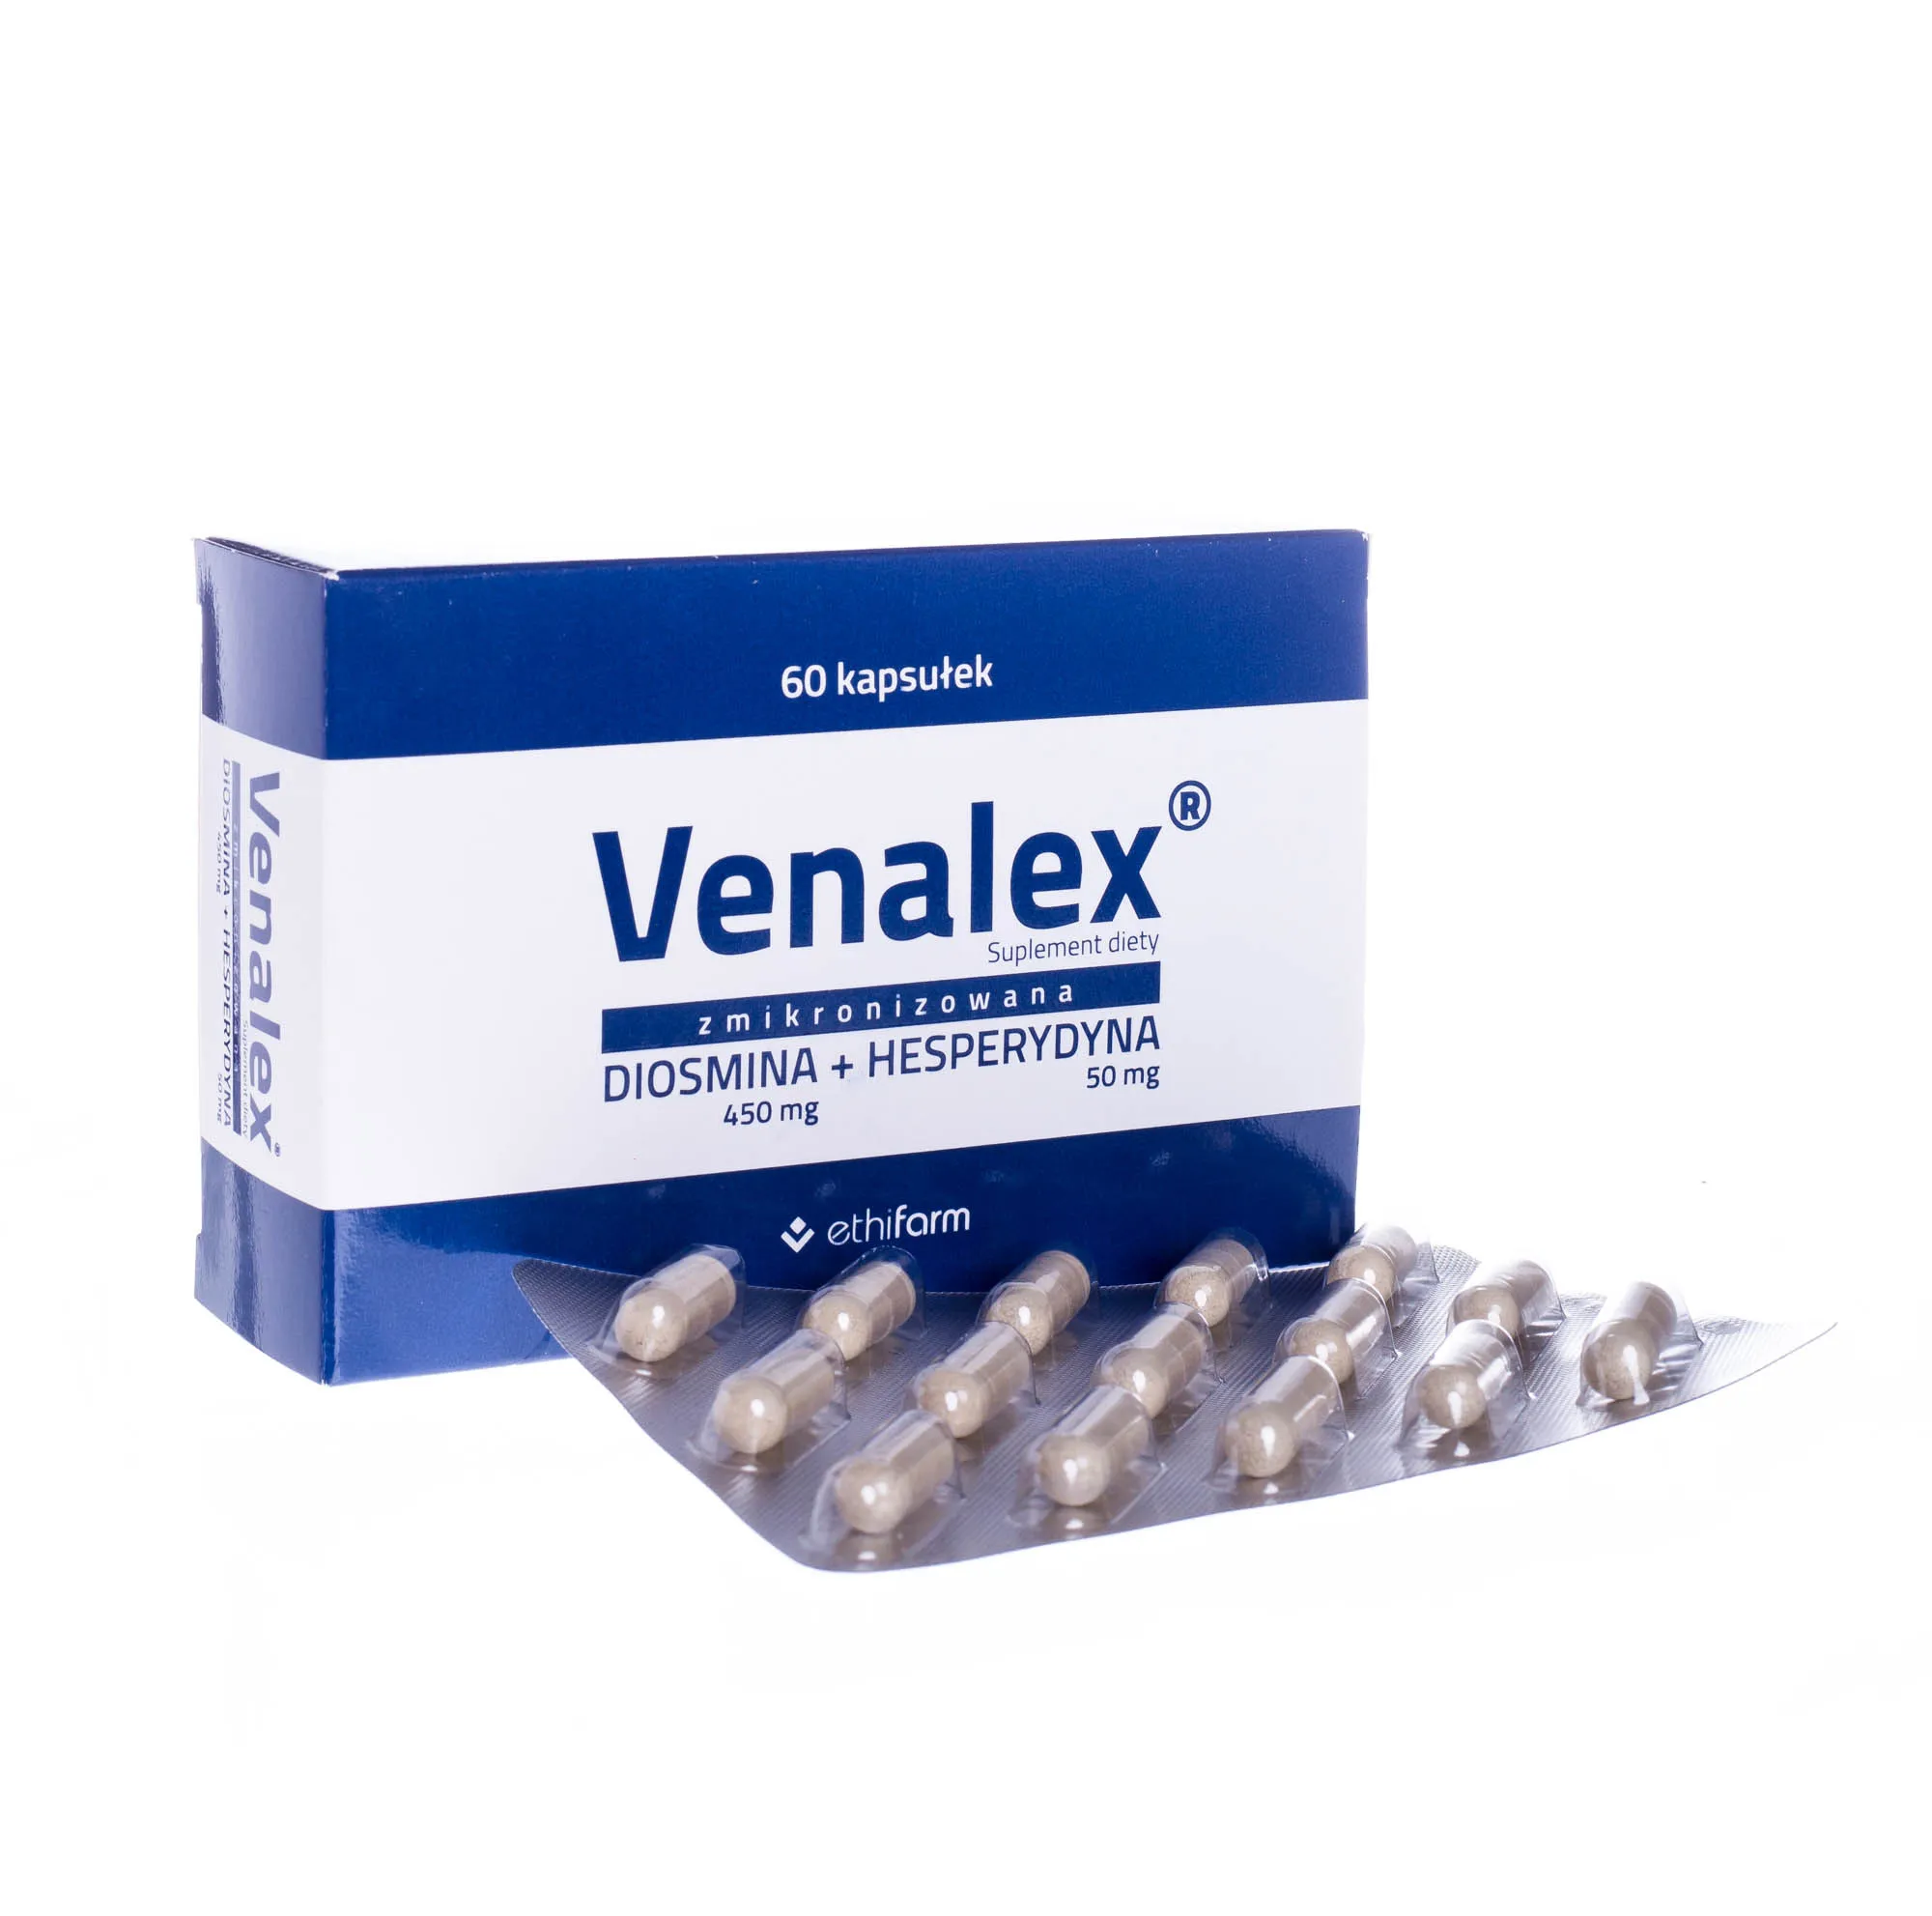 Venalex ( zmikronizowana diosmina 450 mg + Hespedryna 50 mg ), suplement diety, 60 kapsułek